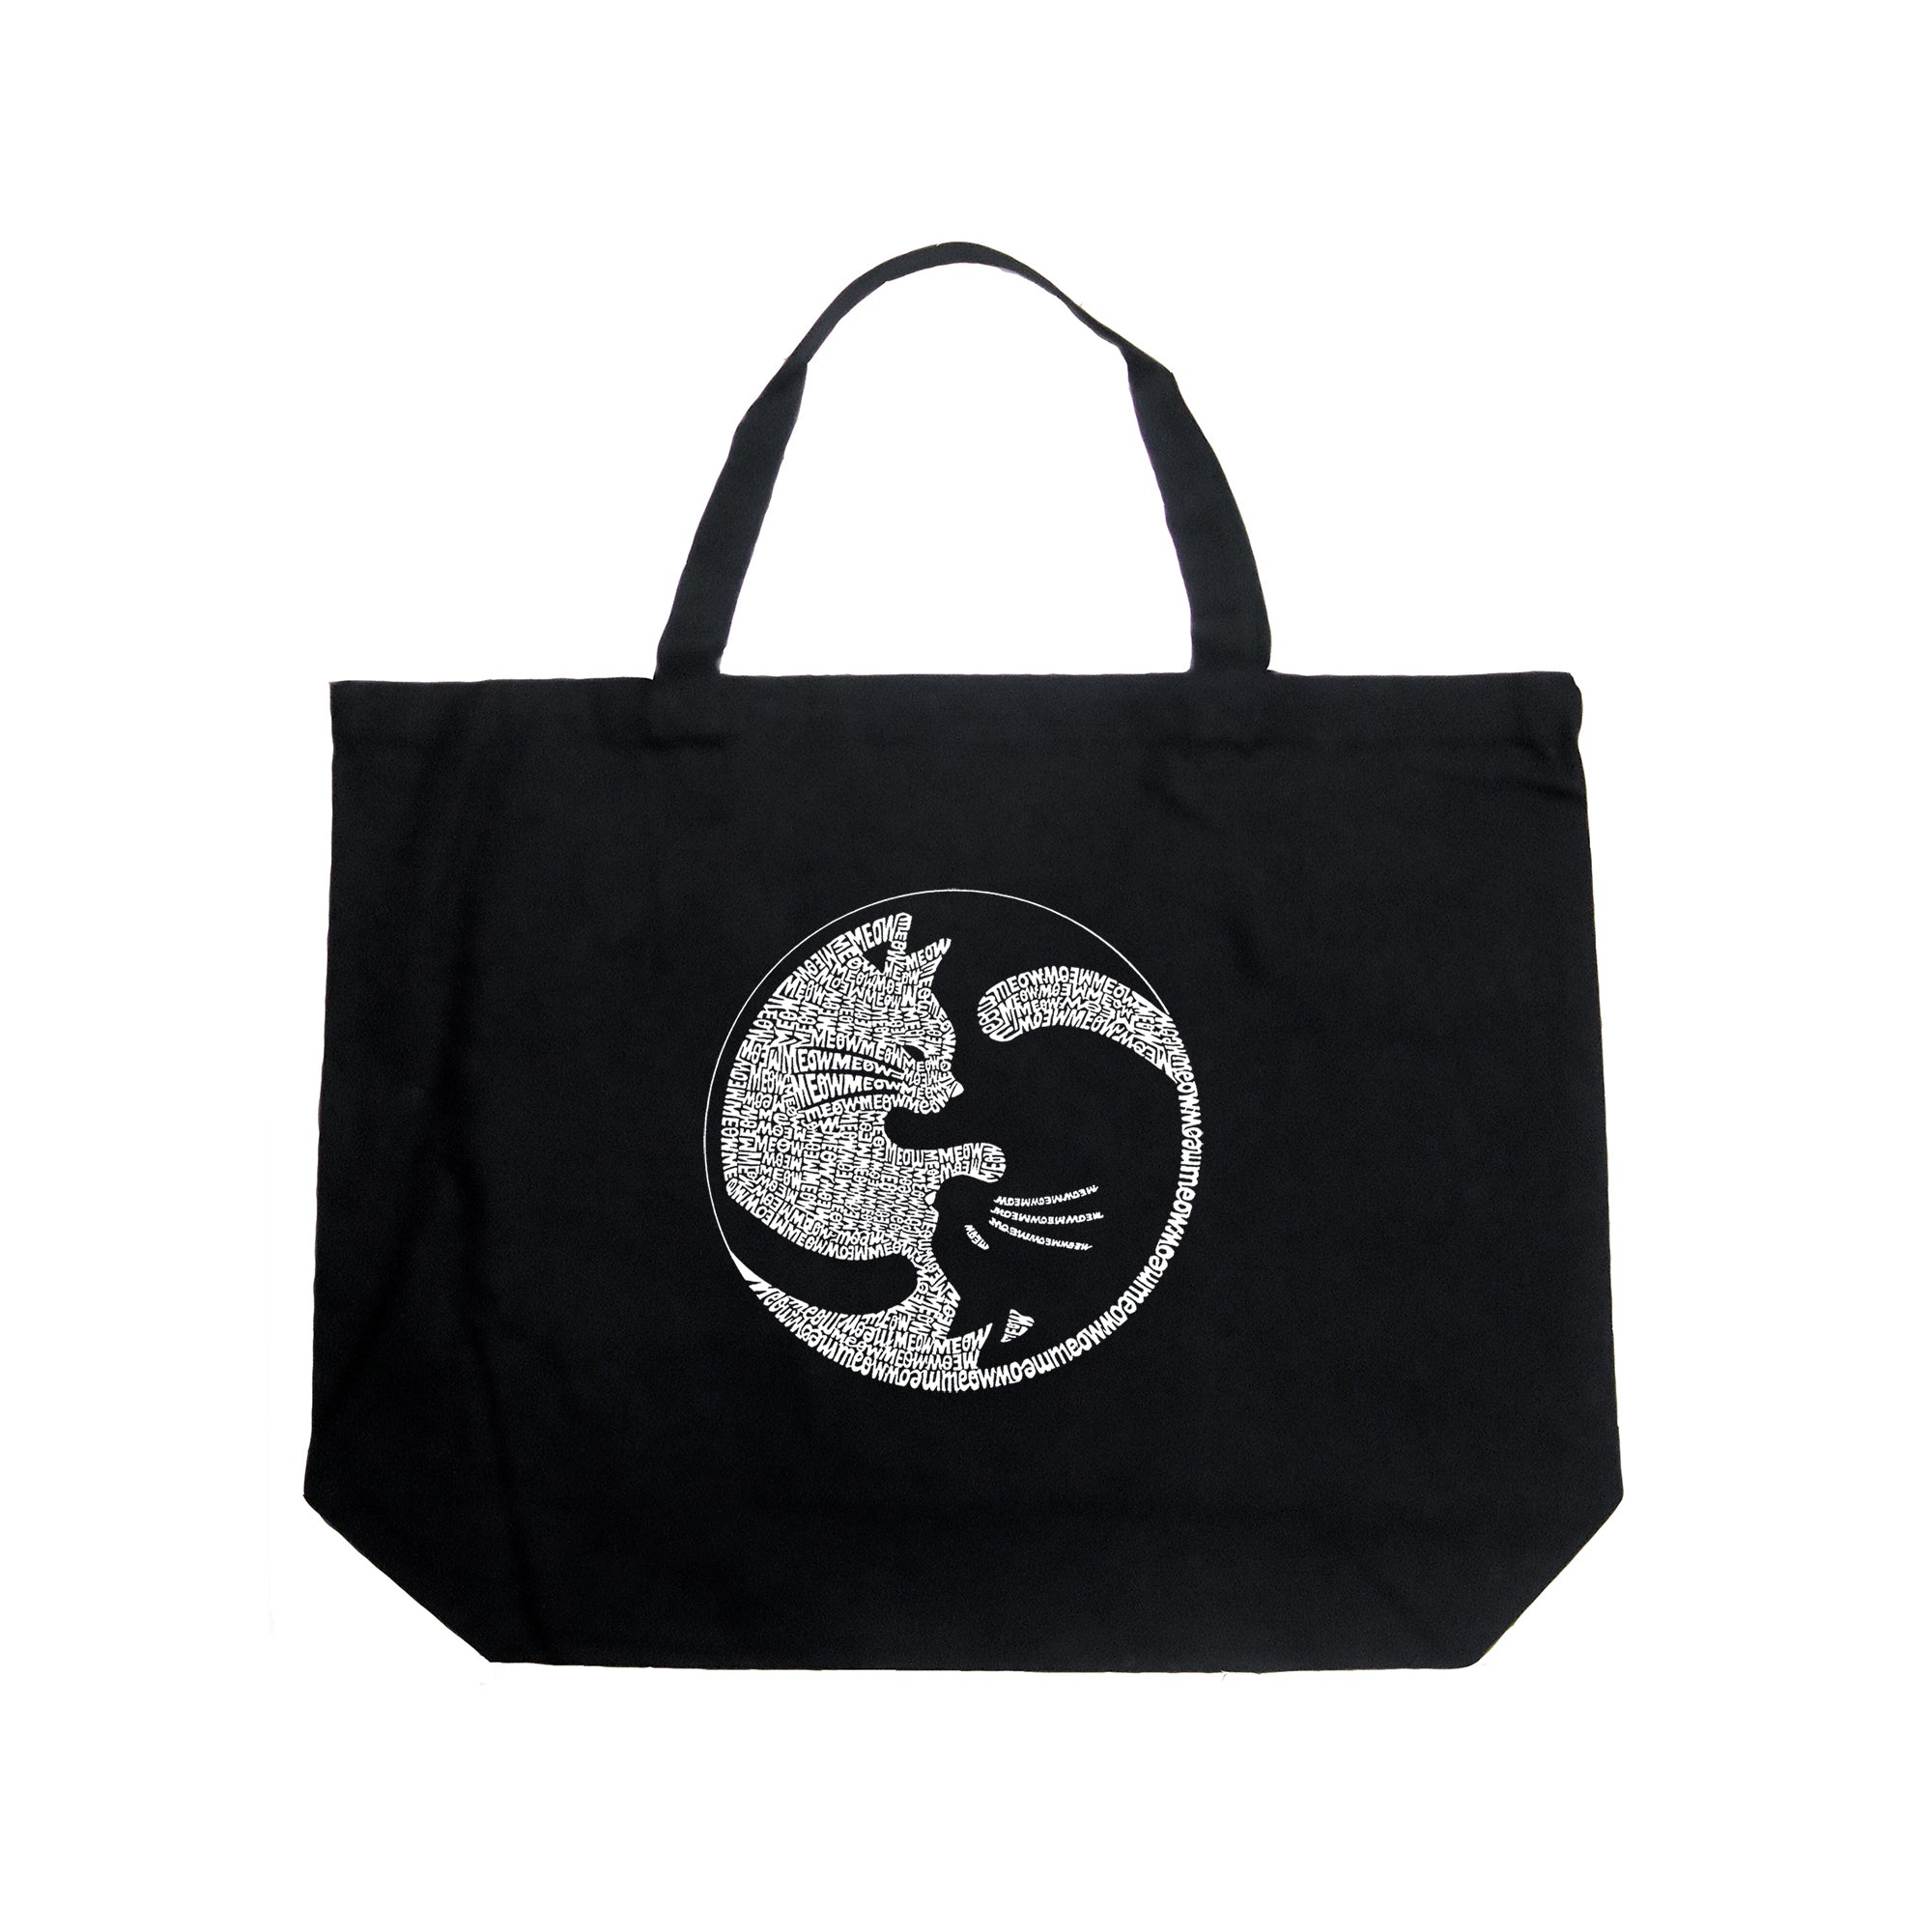 Yin Yang Cat - Large Word Art Tote Bag - Black - LARGE